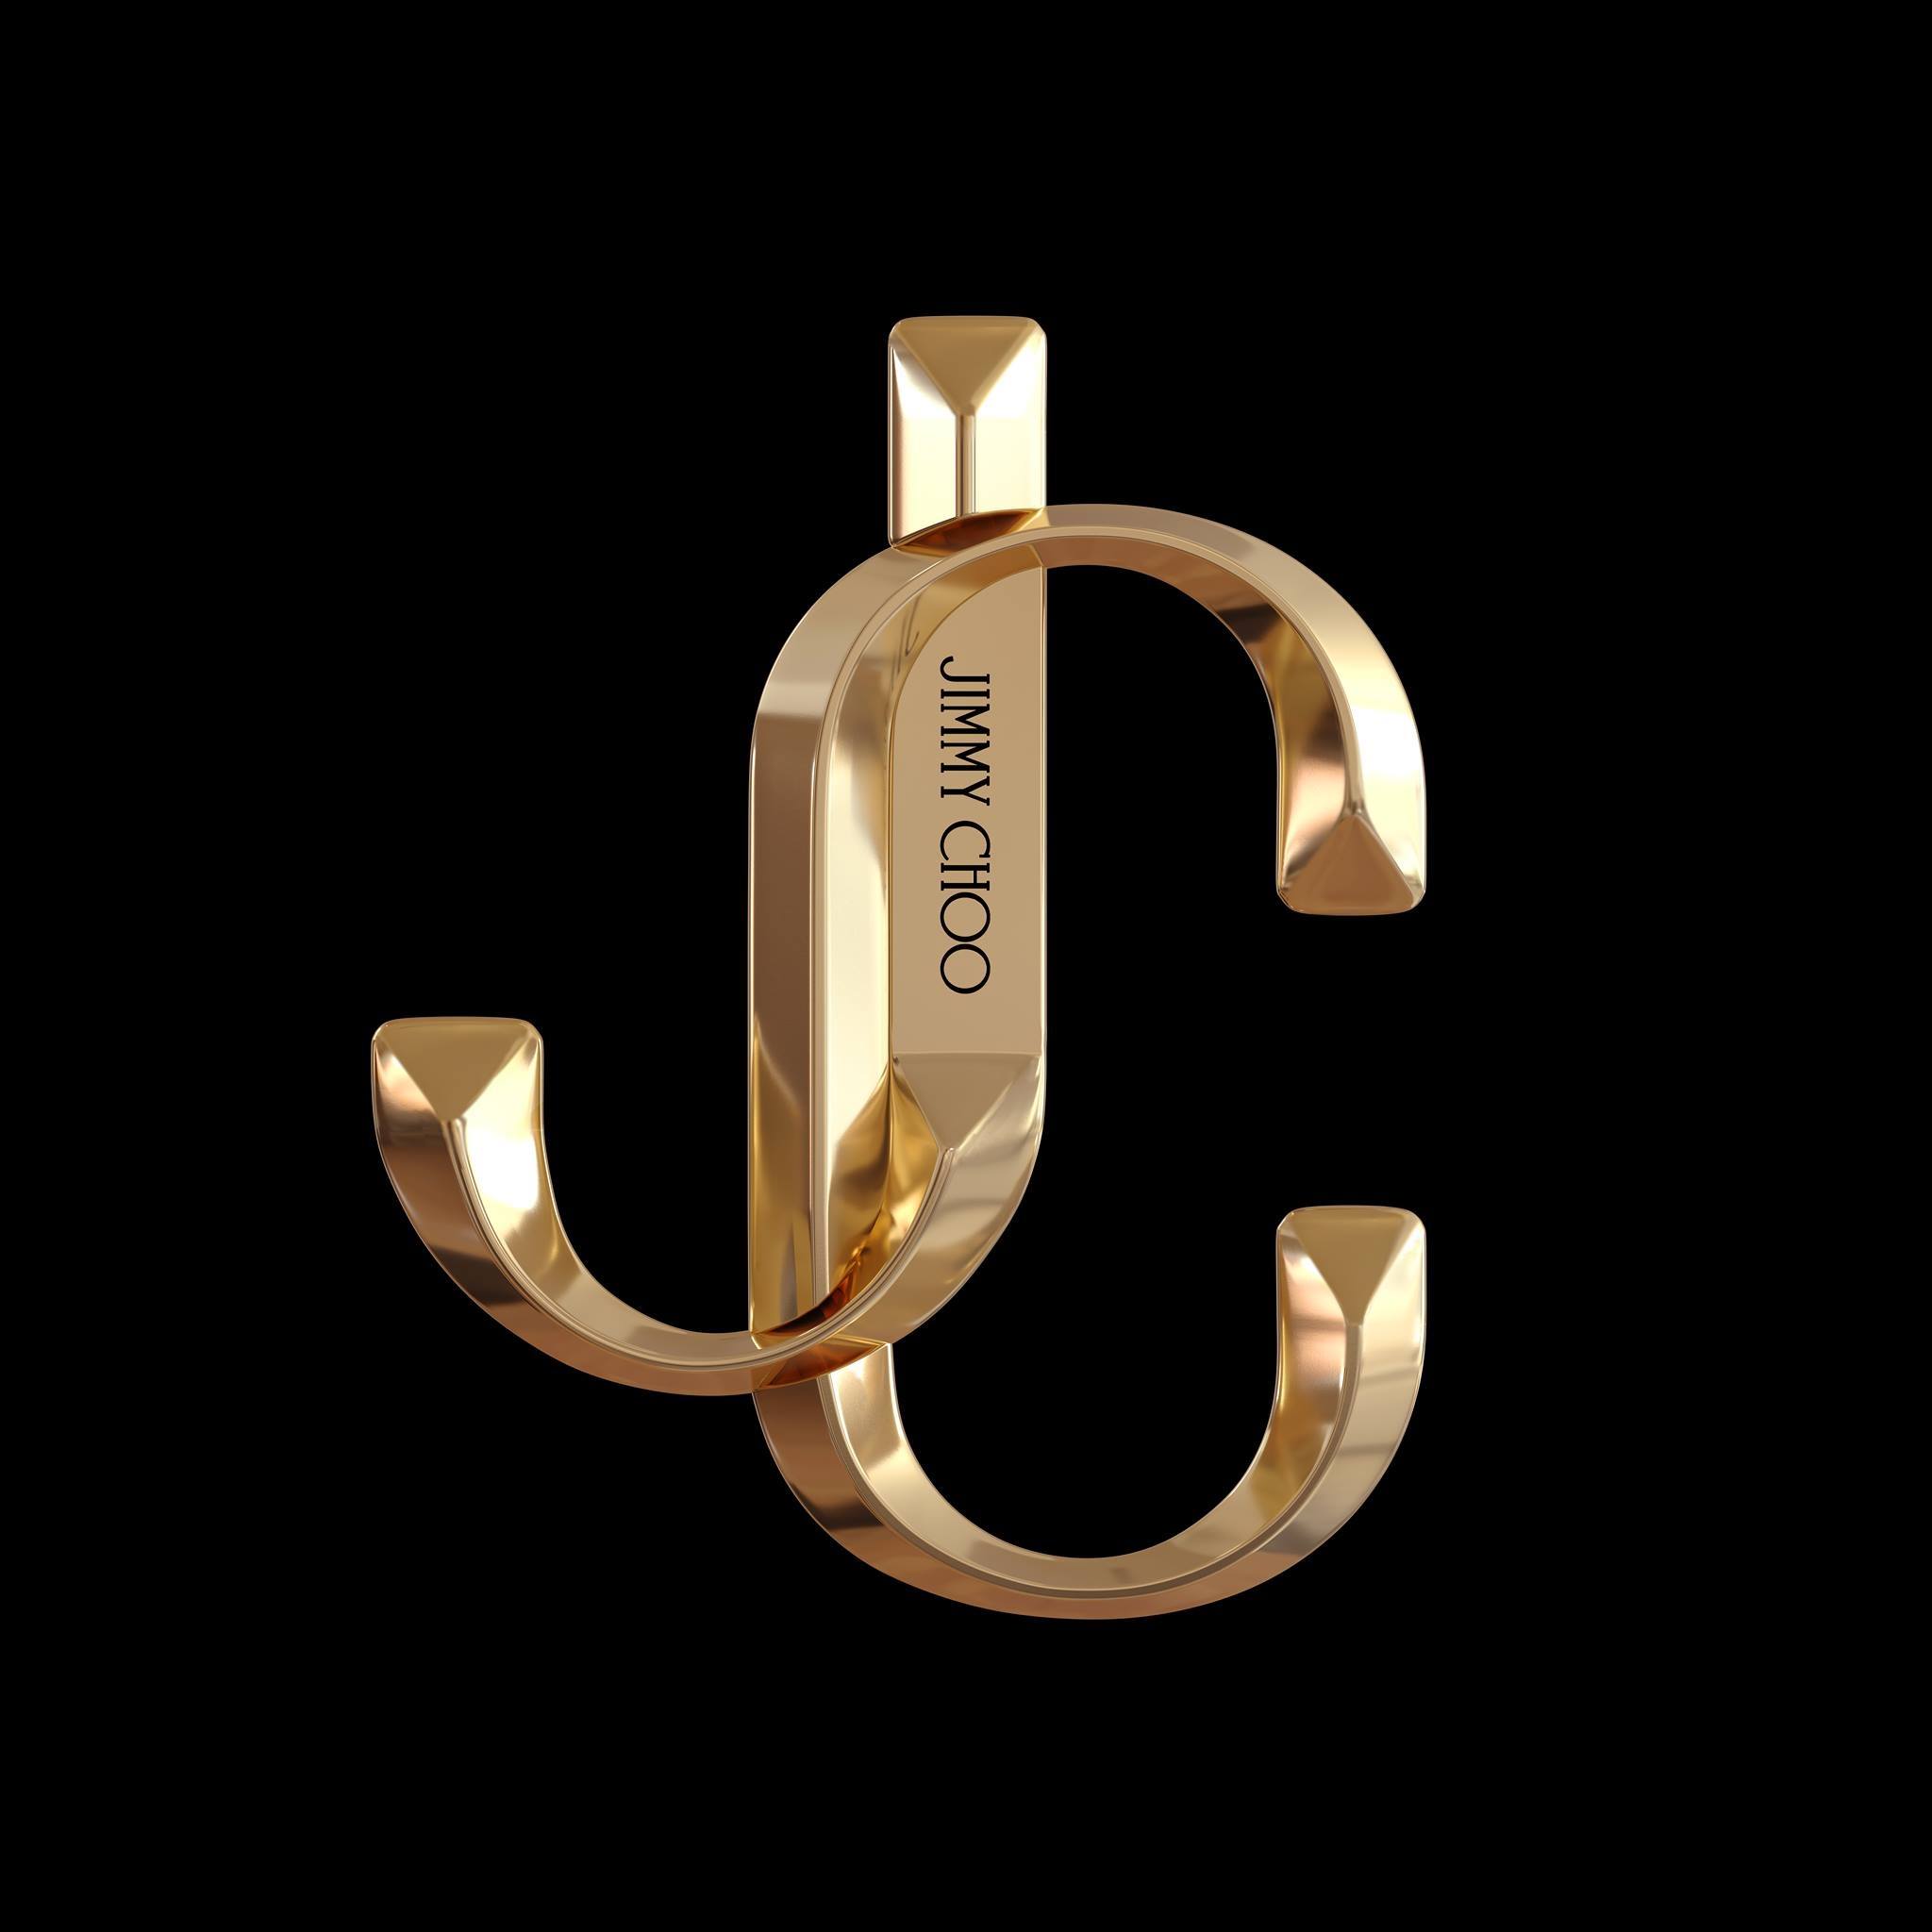 Company logo of Jimmy Choo